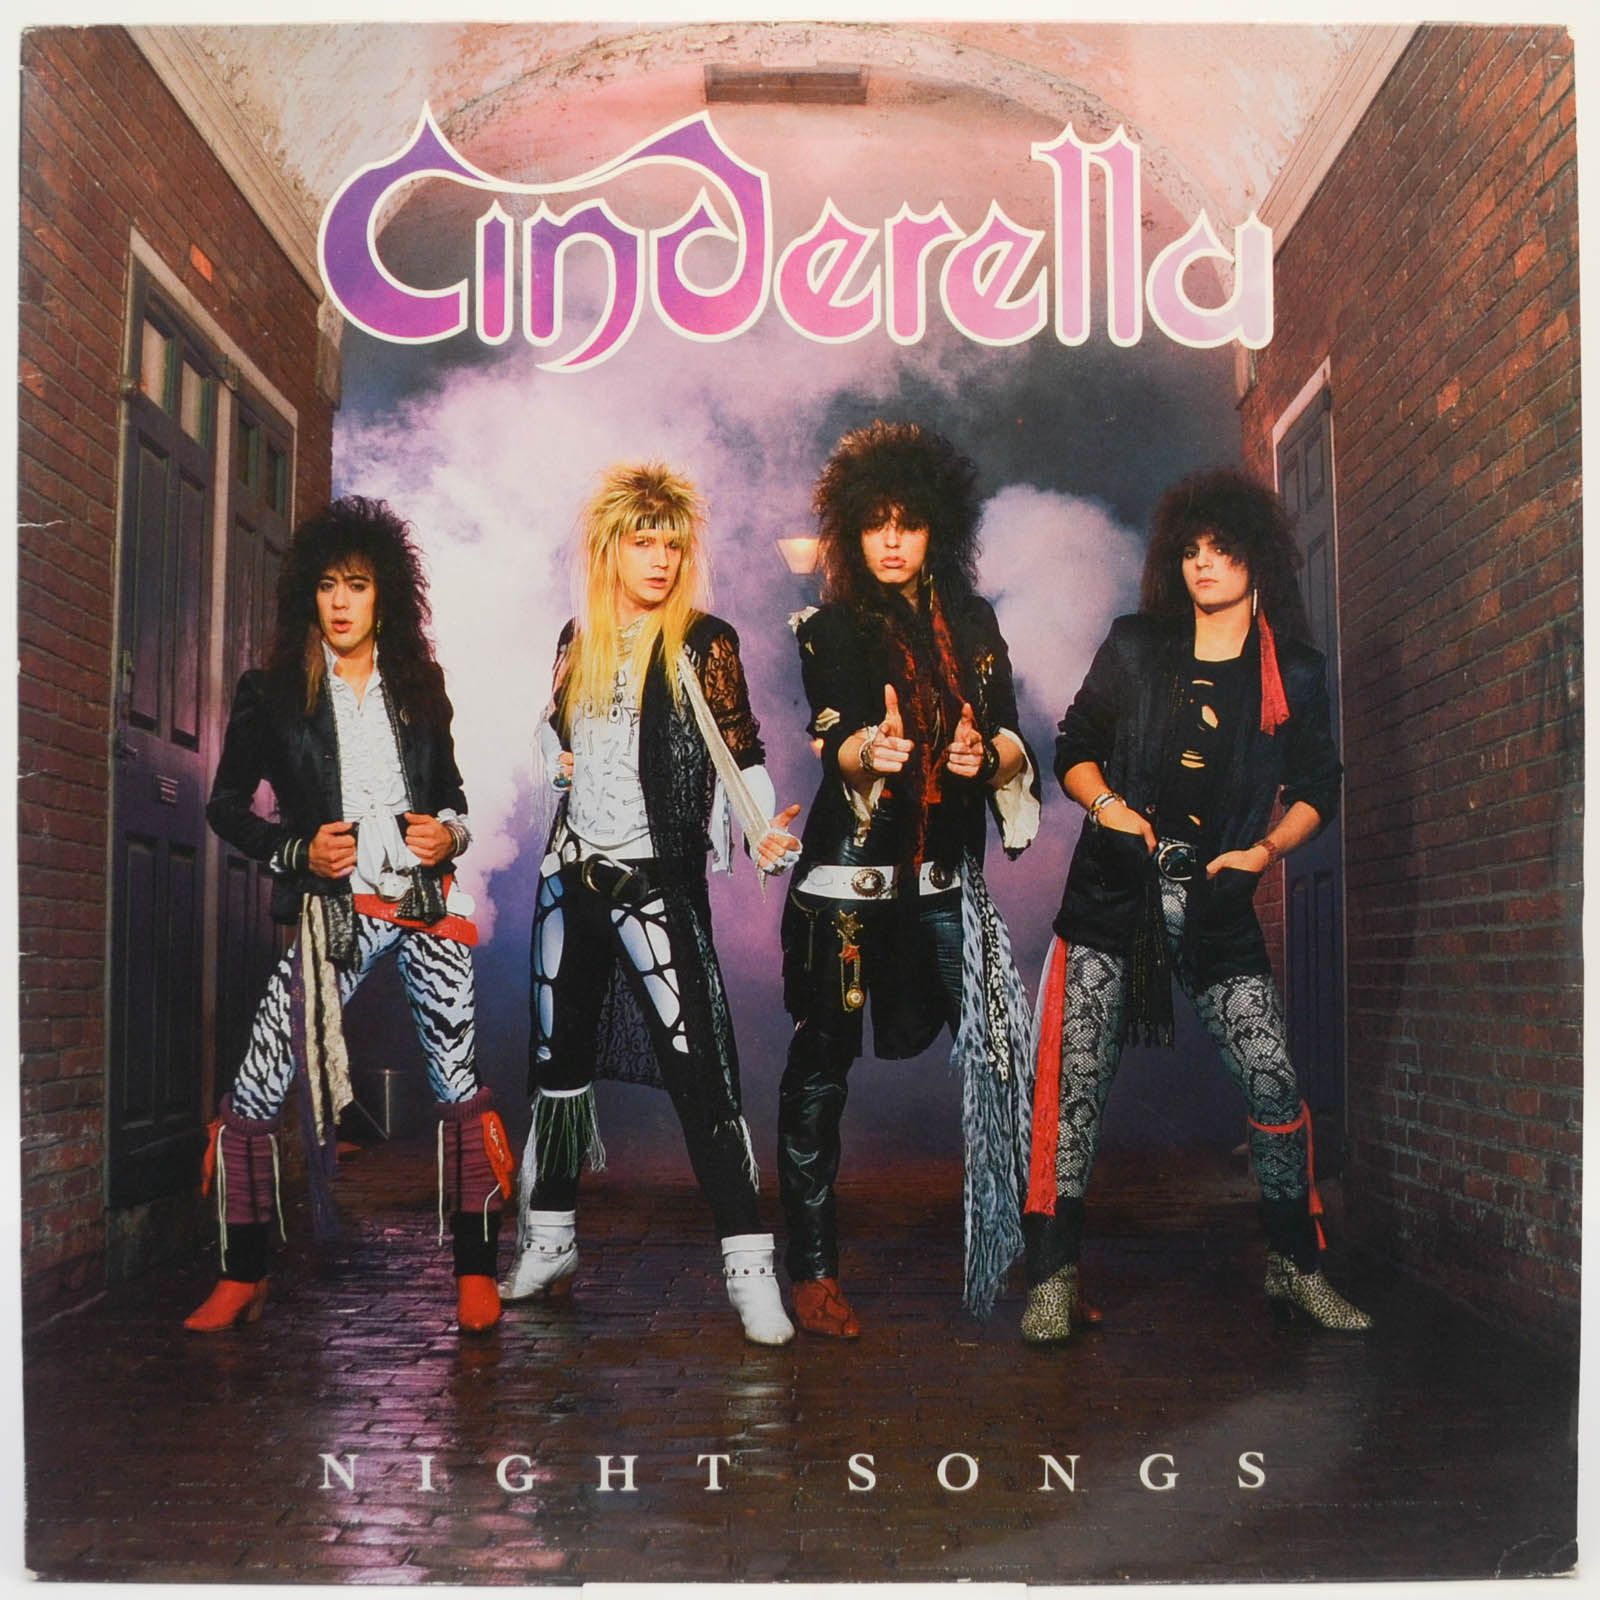 Cinderella — Night Songs, 1986